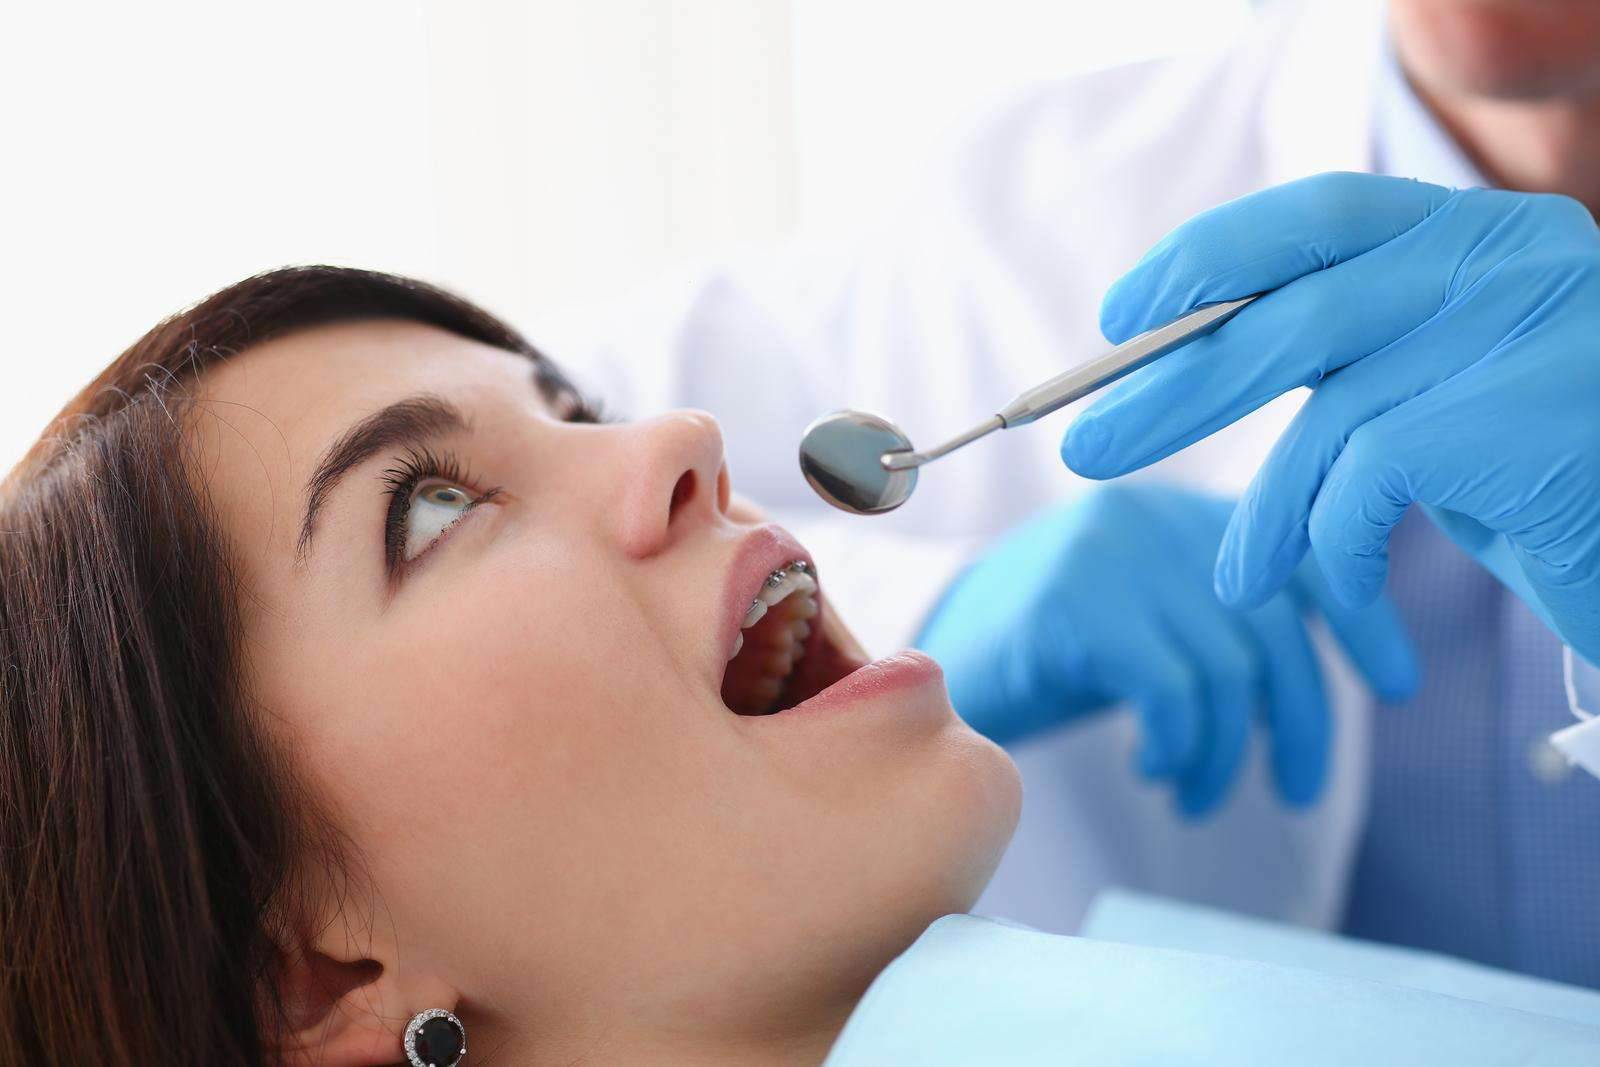 Oral and Maxillofacial surgery